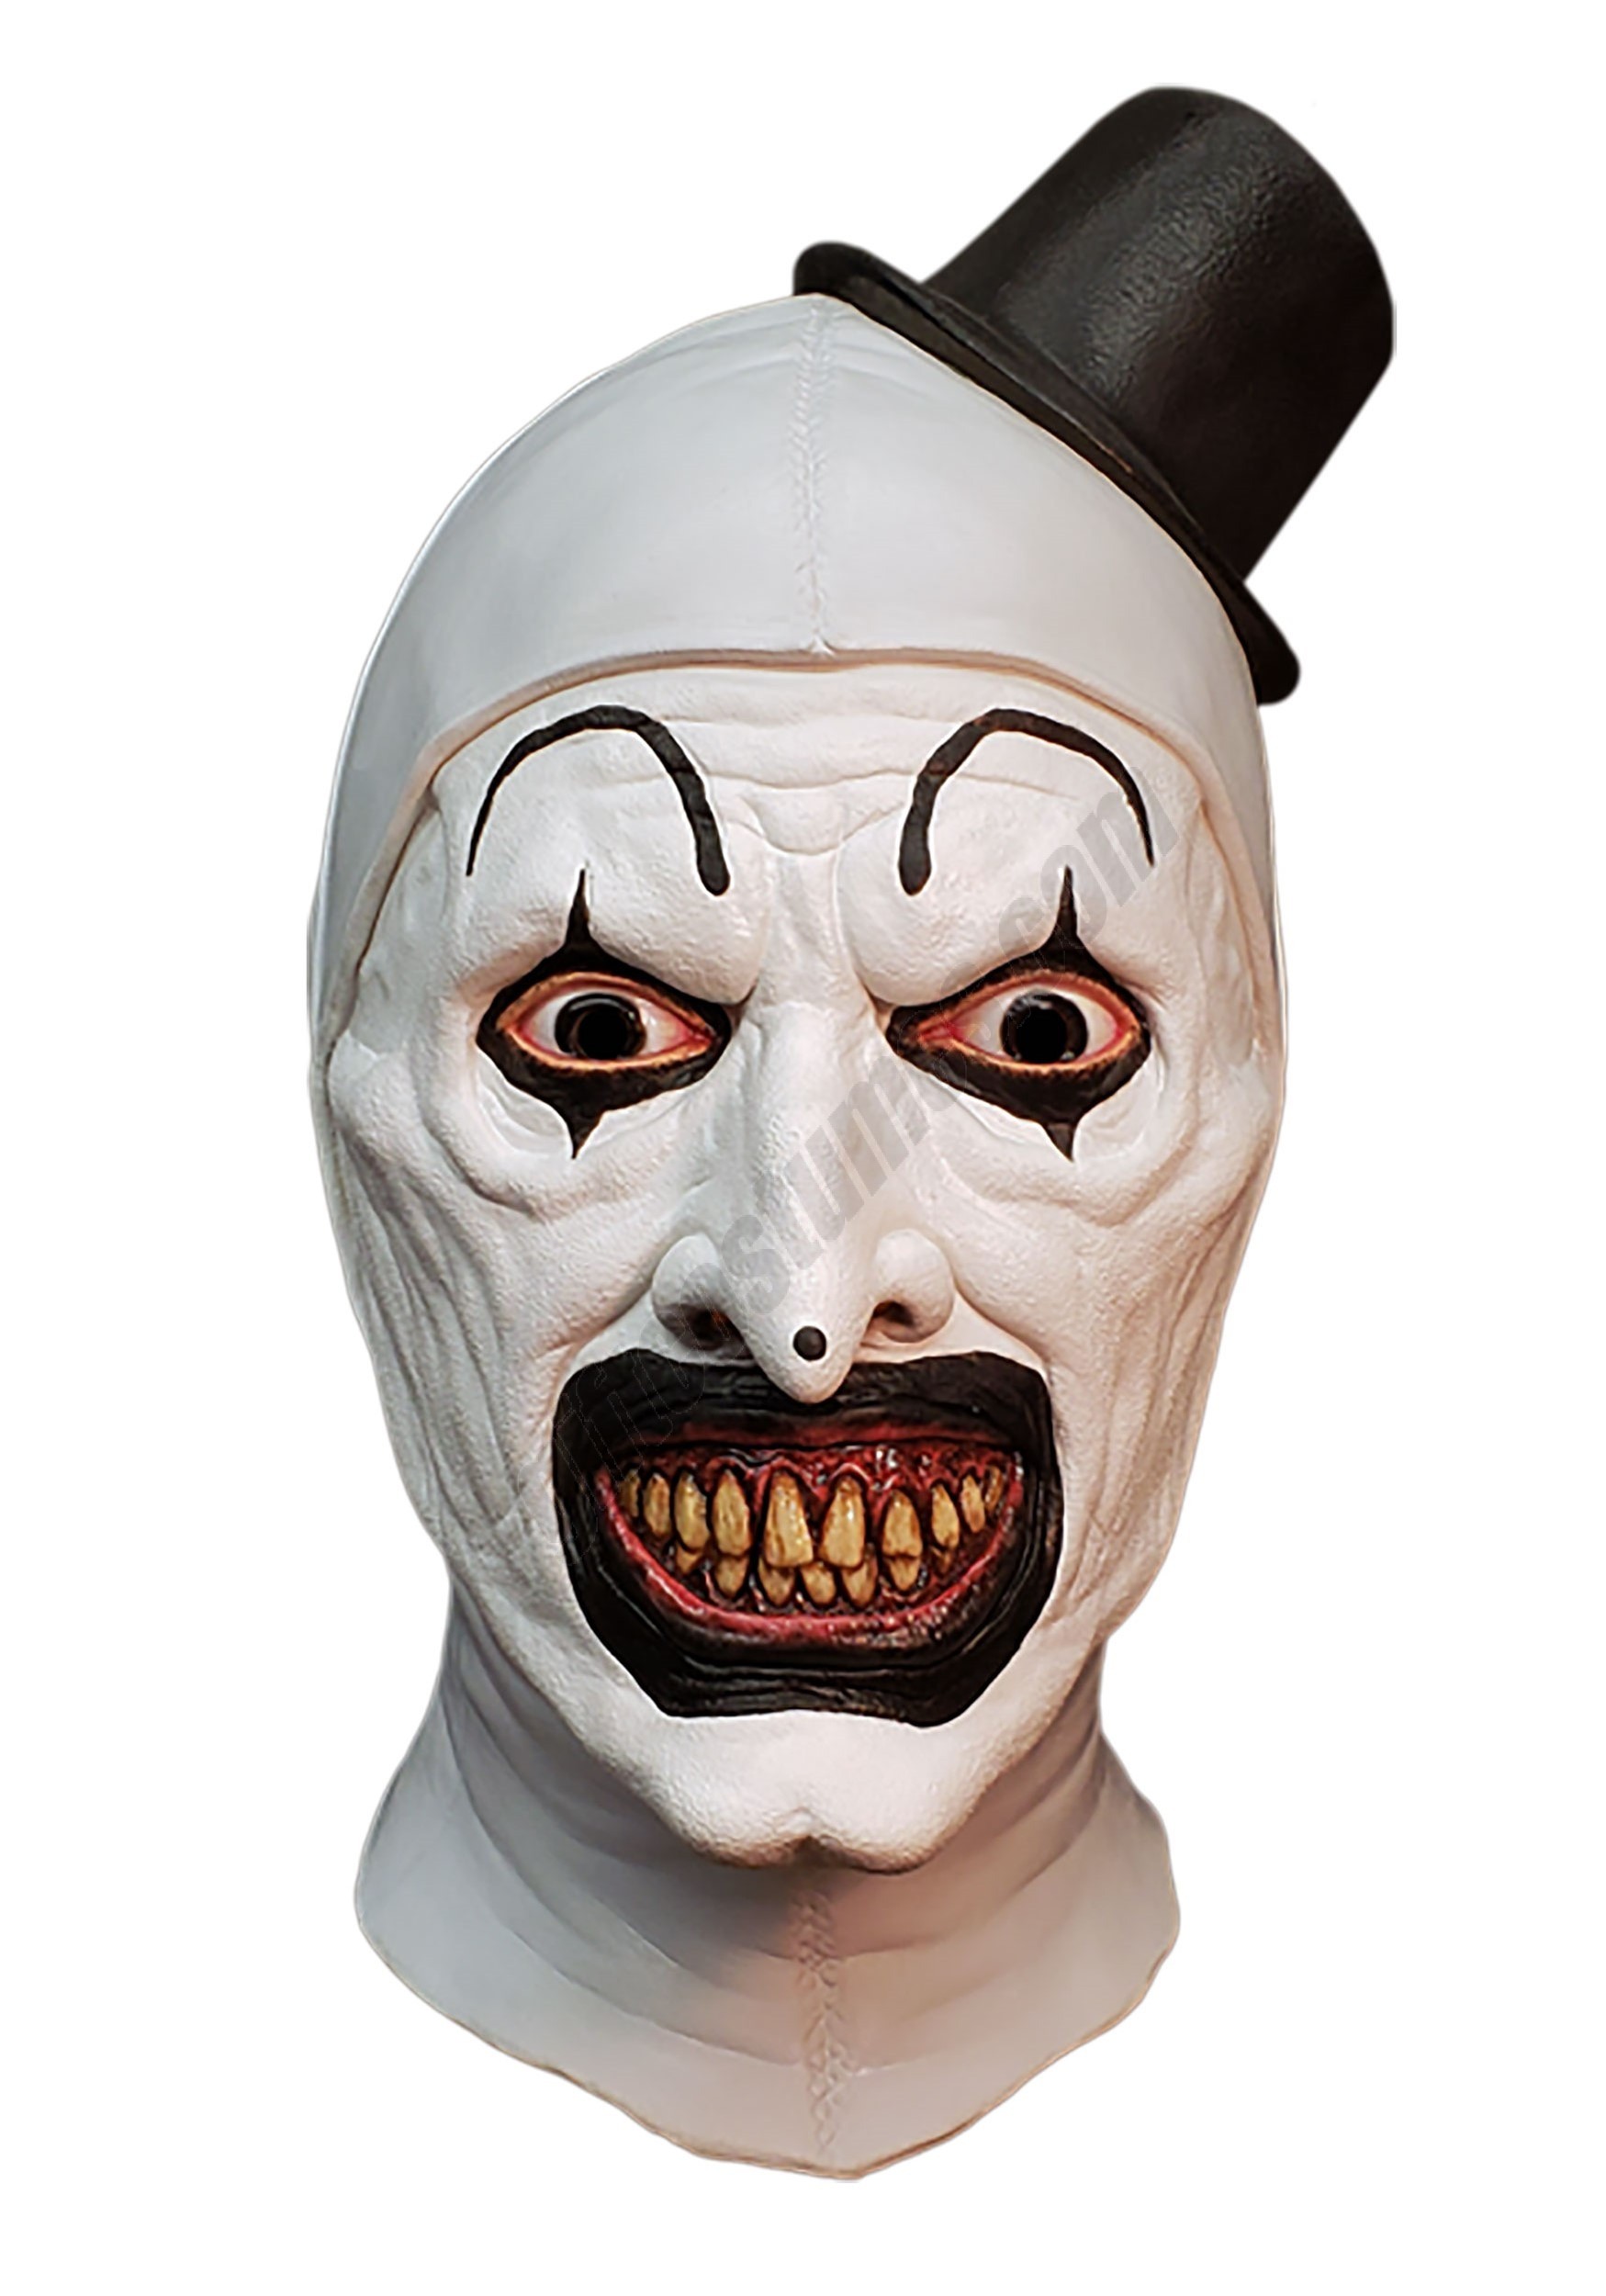 Terrifier Art The Clown Mask Promotions - Terrifier Art The Clown Mask Promotions